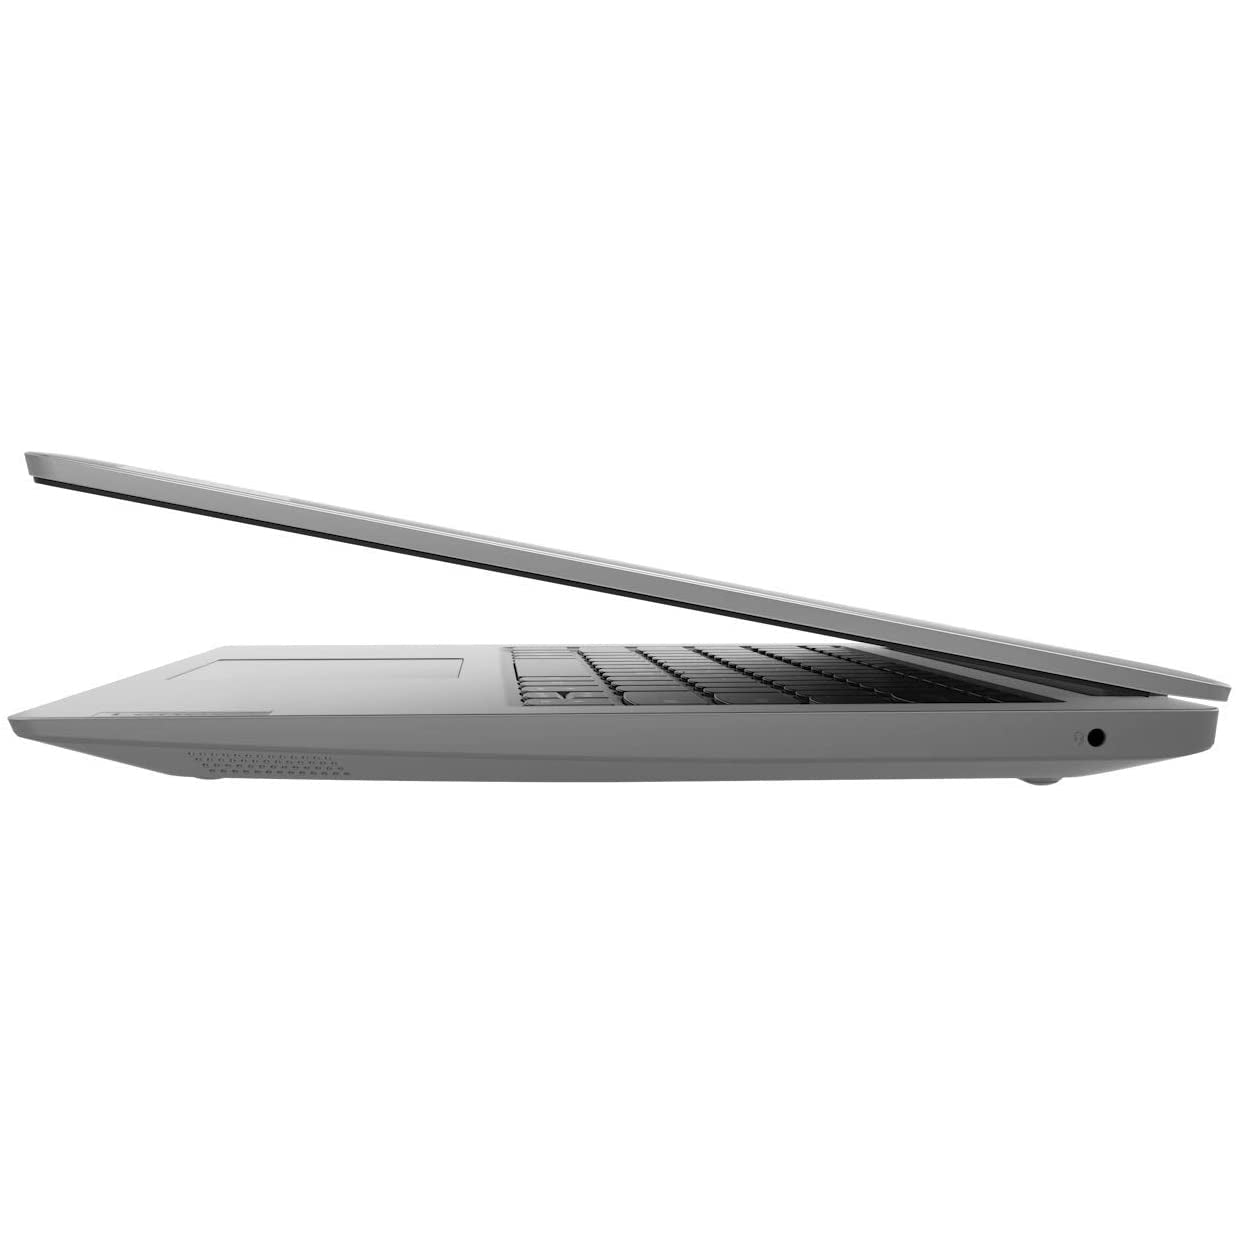 Lenovo IdeaPad 1 14ADA05 (82GW0037UK) Laptop, AMD 3050e, 4GB RAM, 64GB eMMC, 14", Platinum Grey - Refurbished Excellent